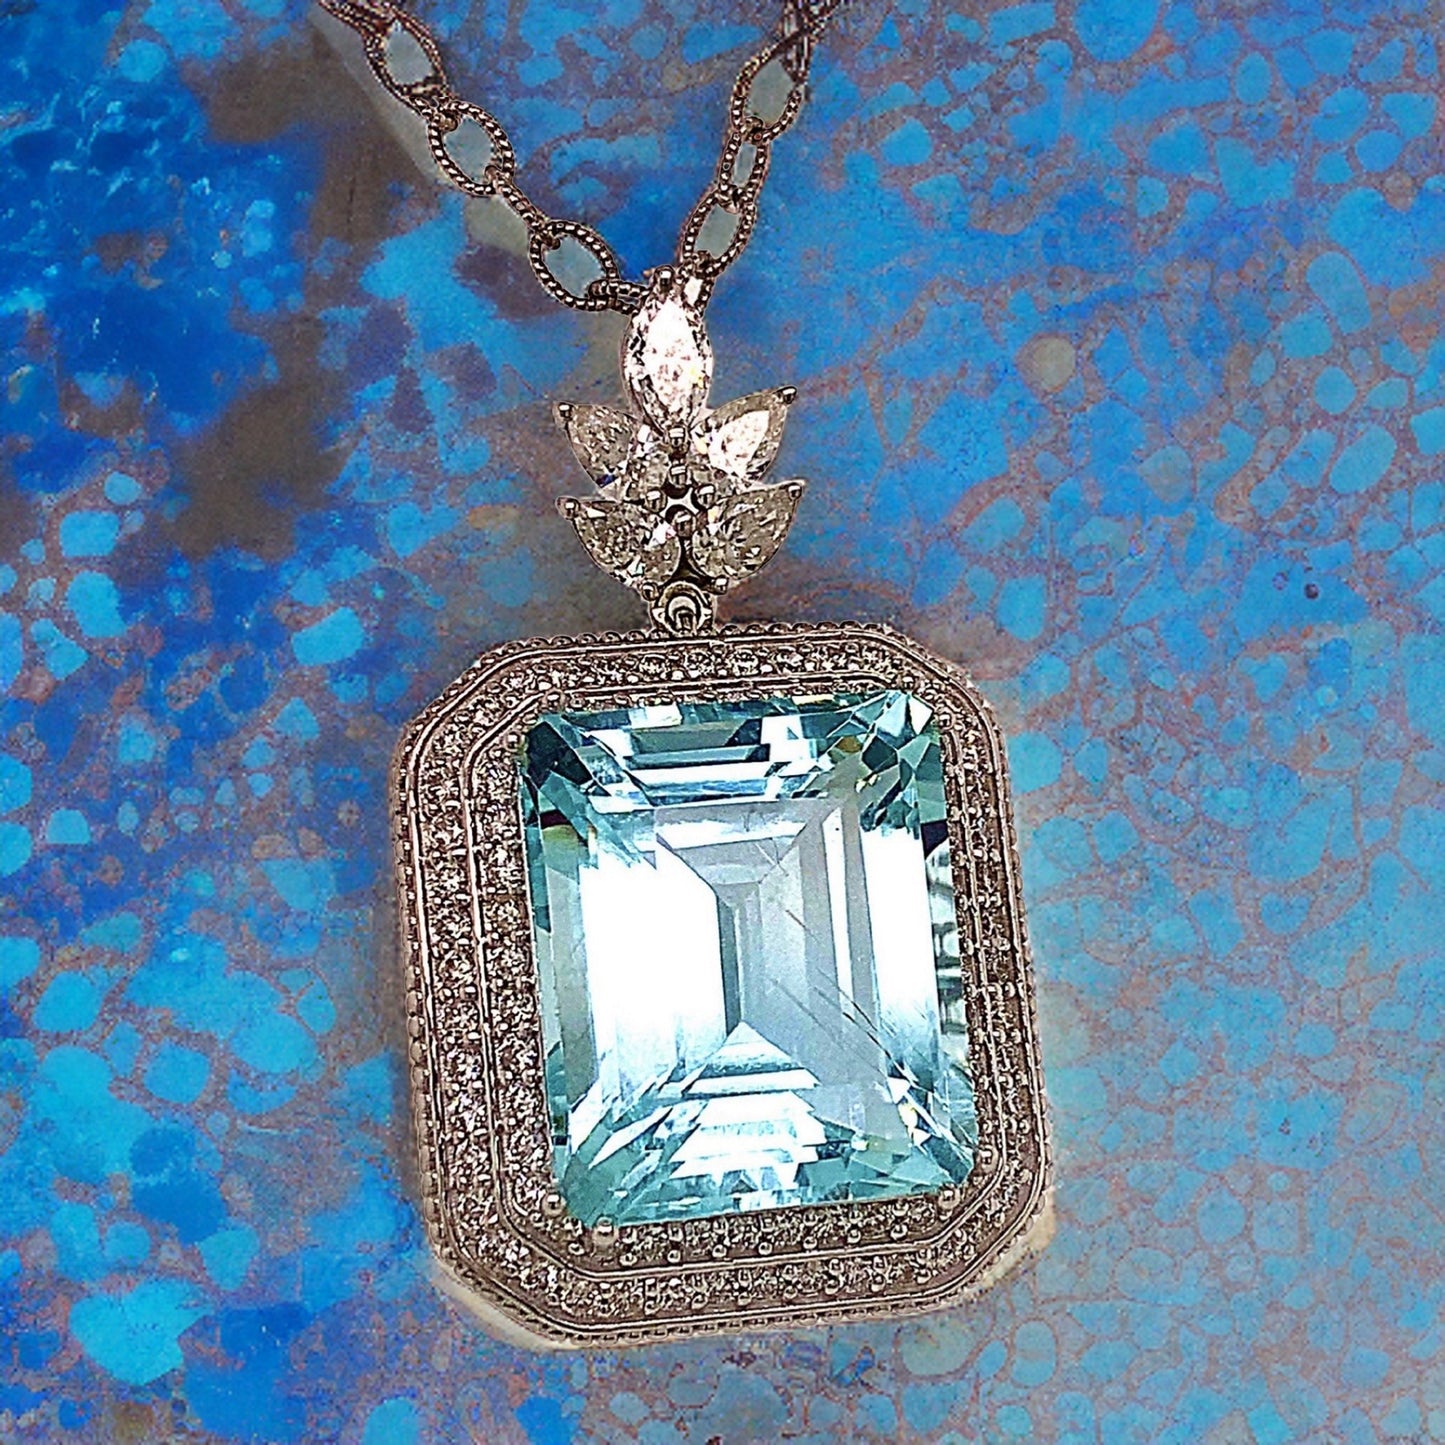 Natural Aquamarine Diamond Necklace 14k Gold 10.45 TCW Certified $9,520 211196 - Certified Fine Jewelry